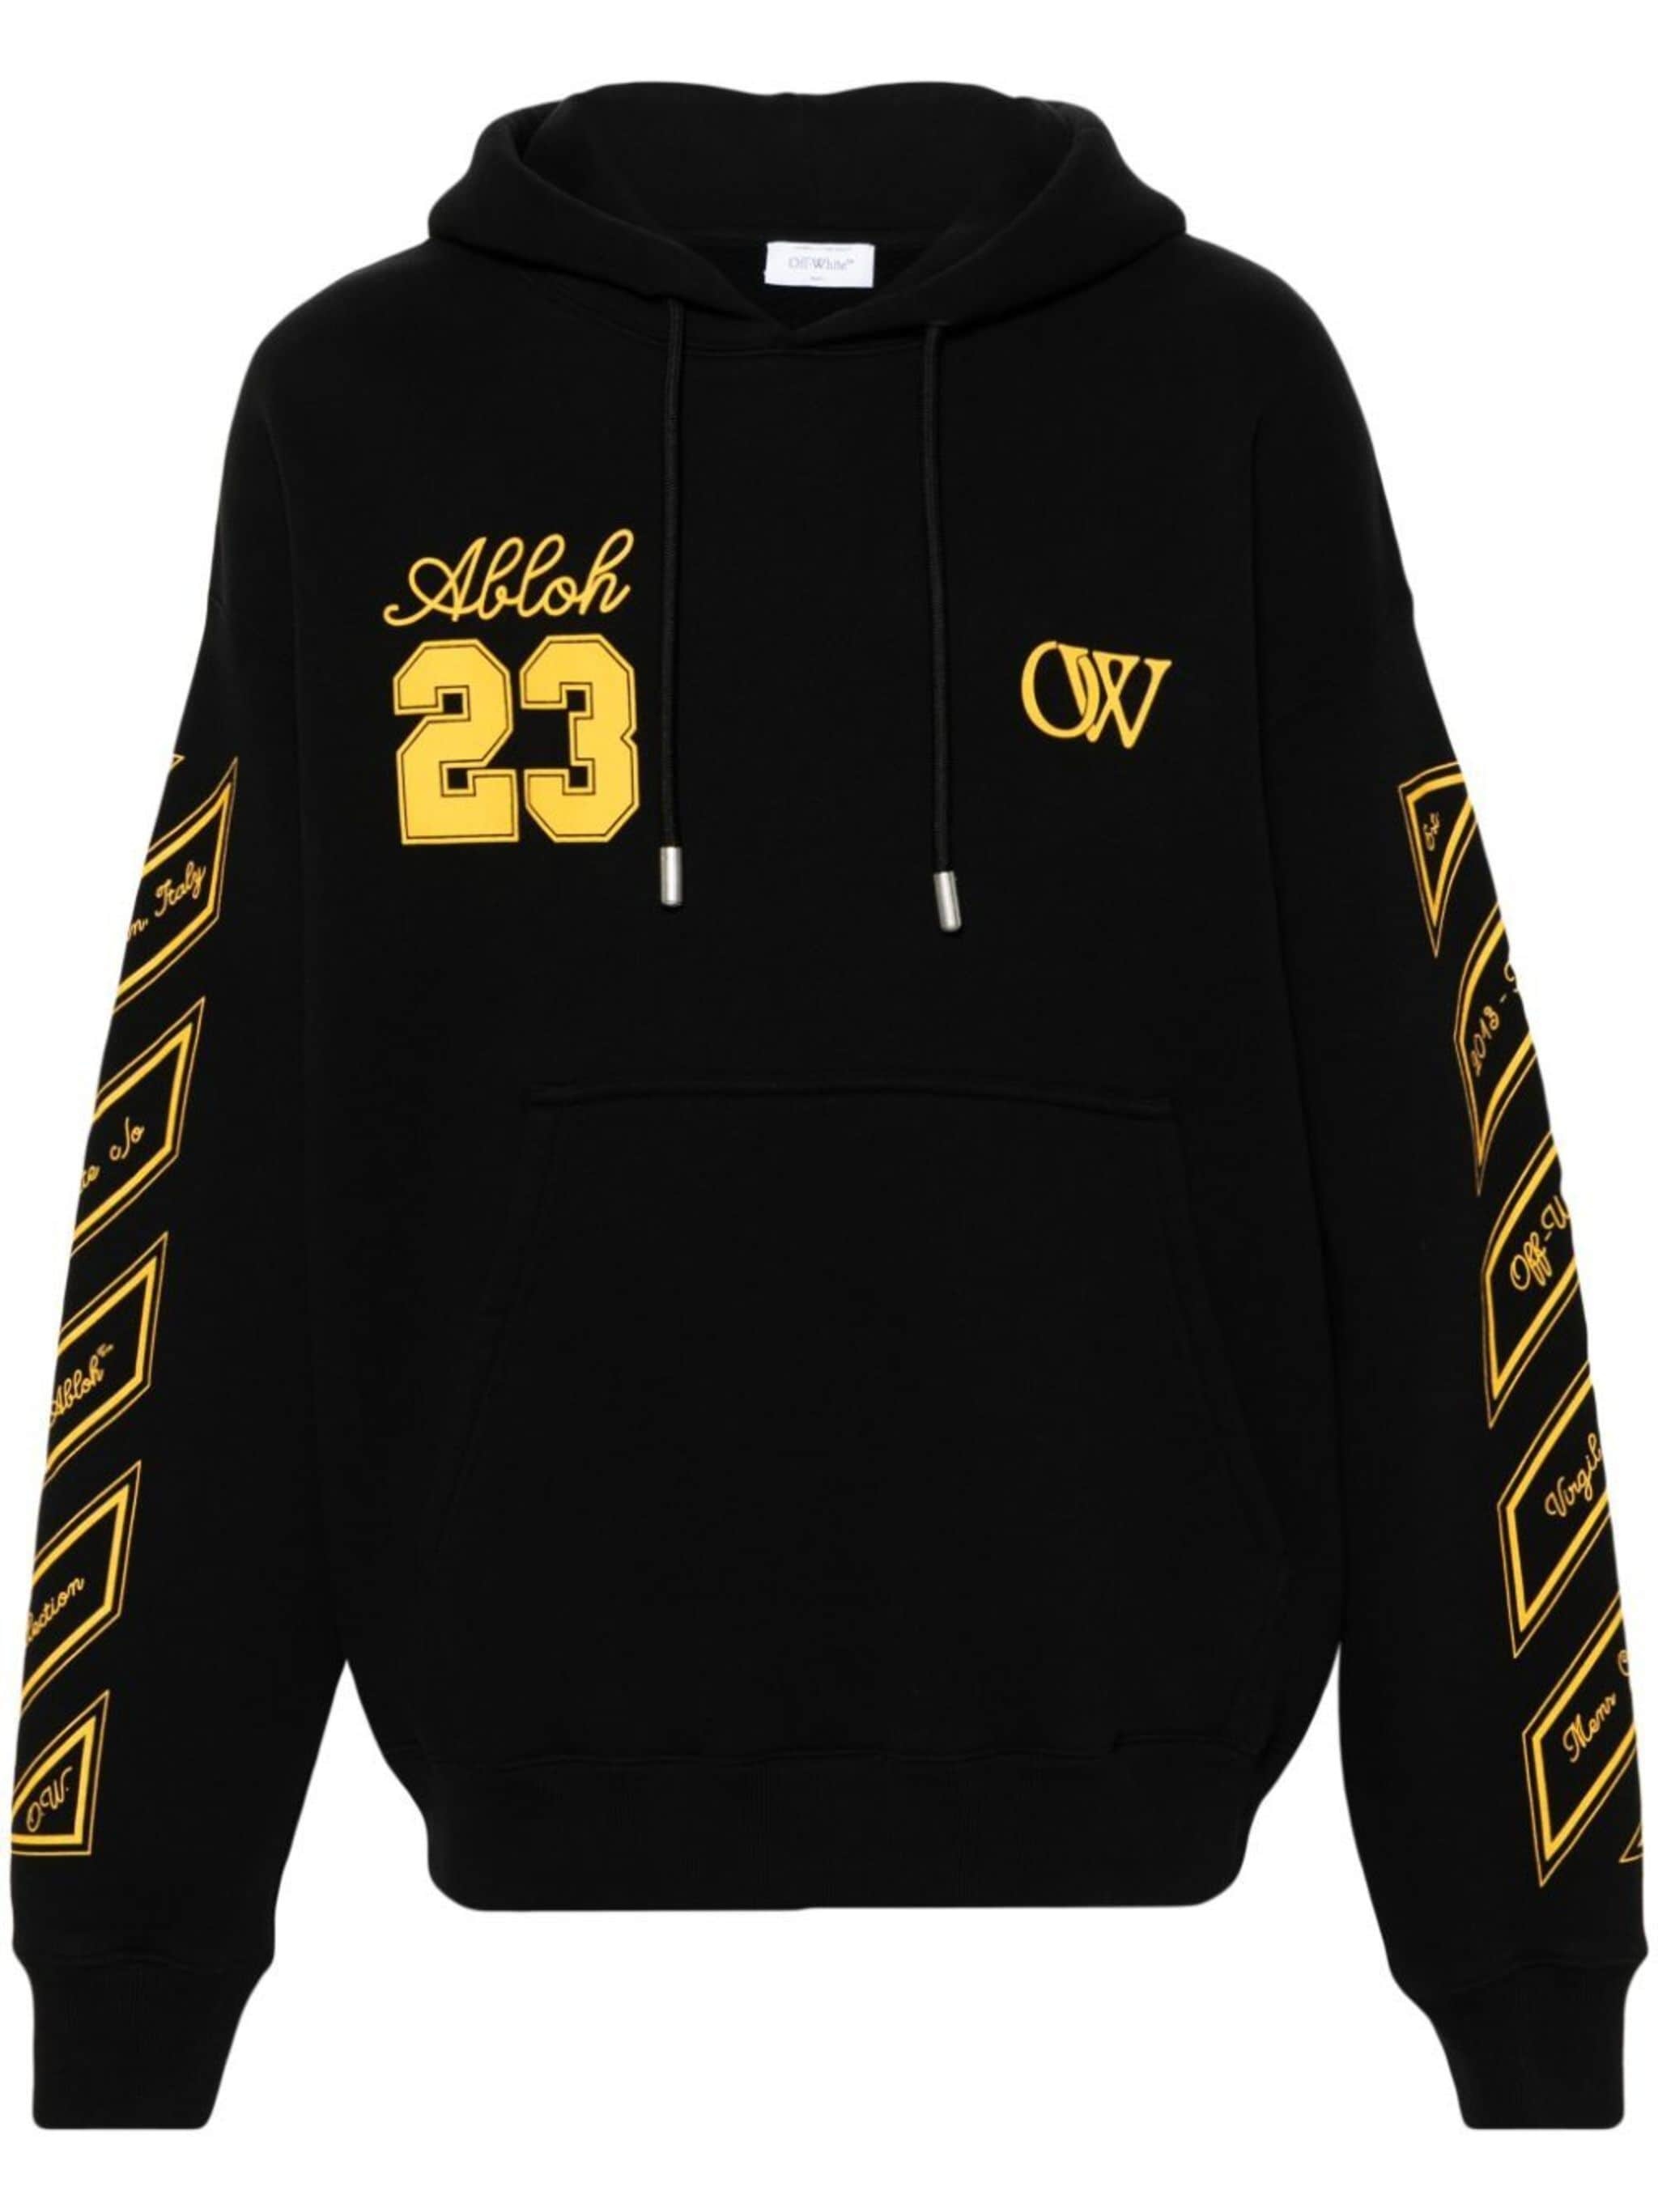 Ow 23 Skate cotton hoodie - 2